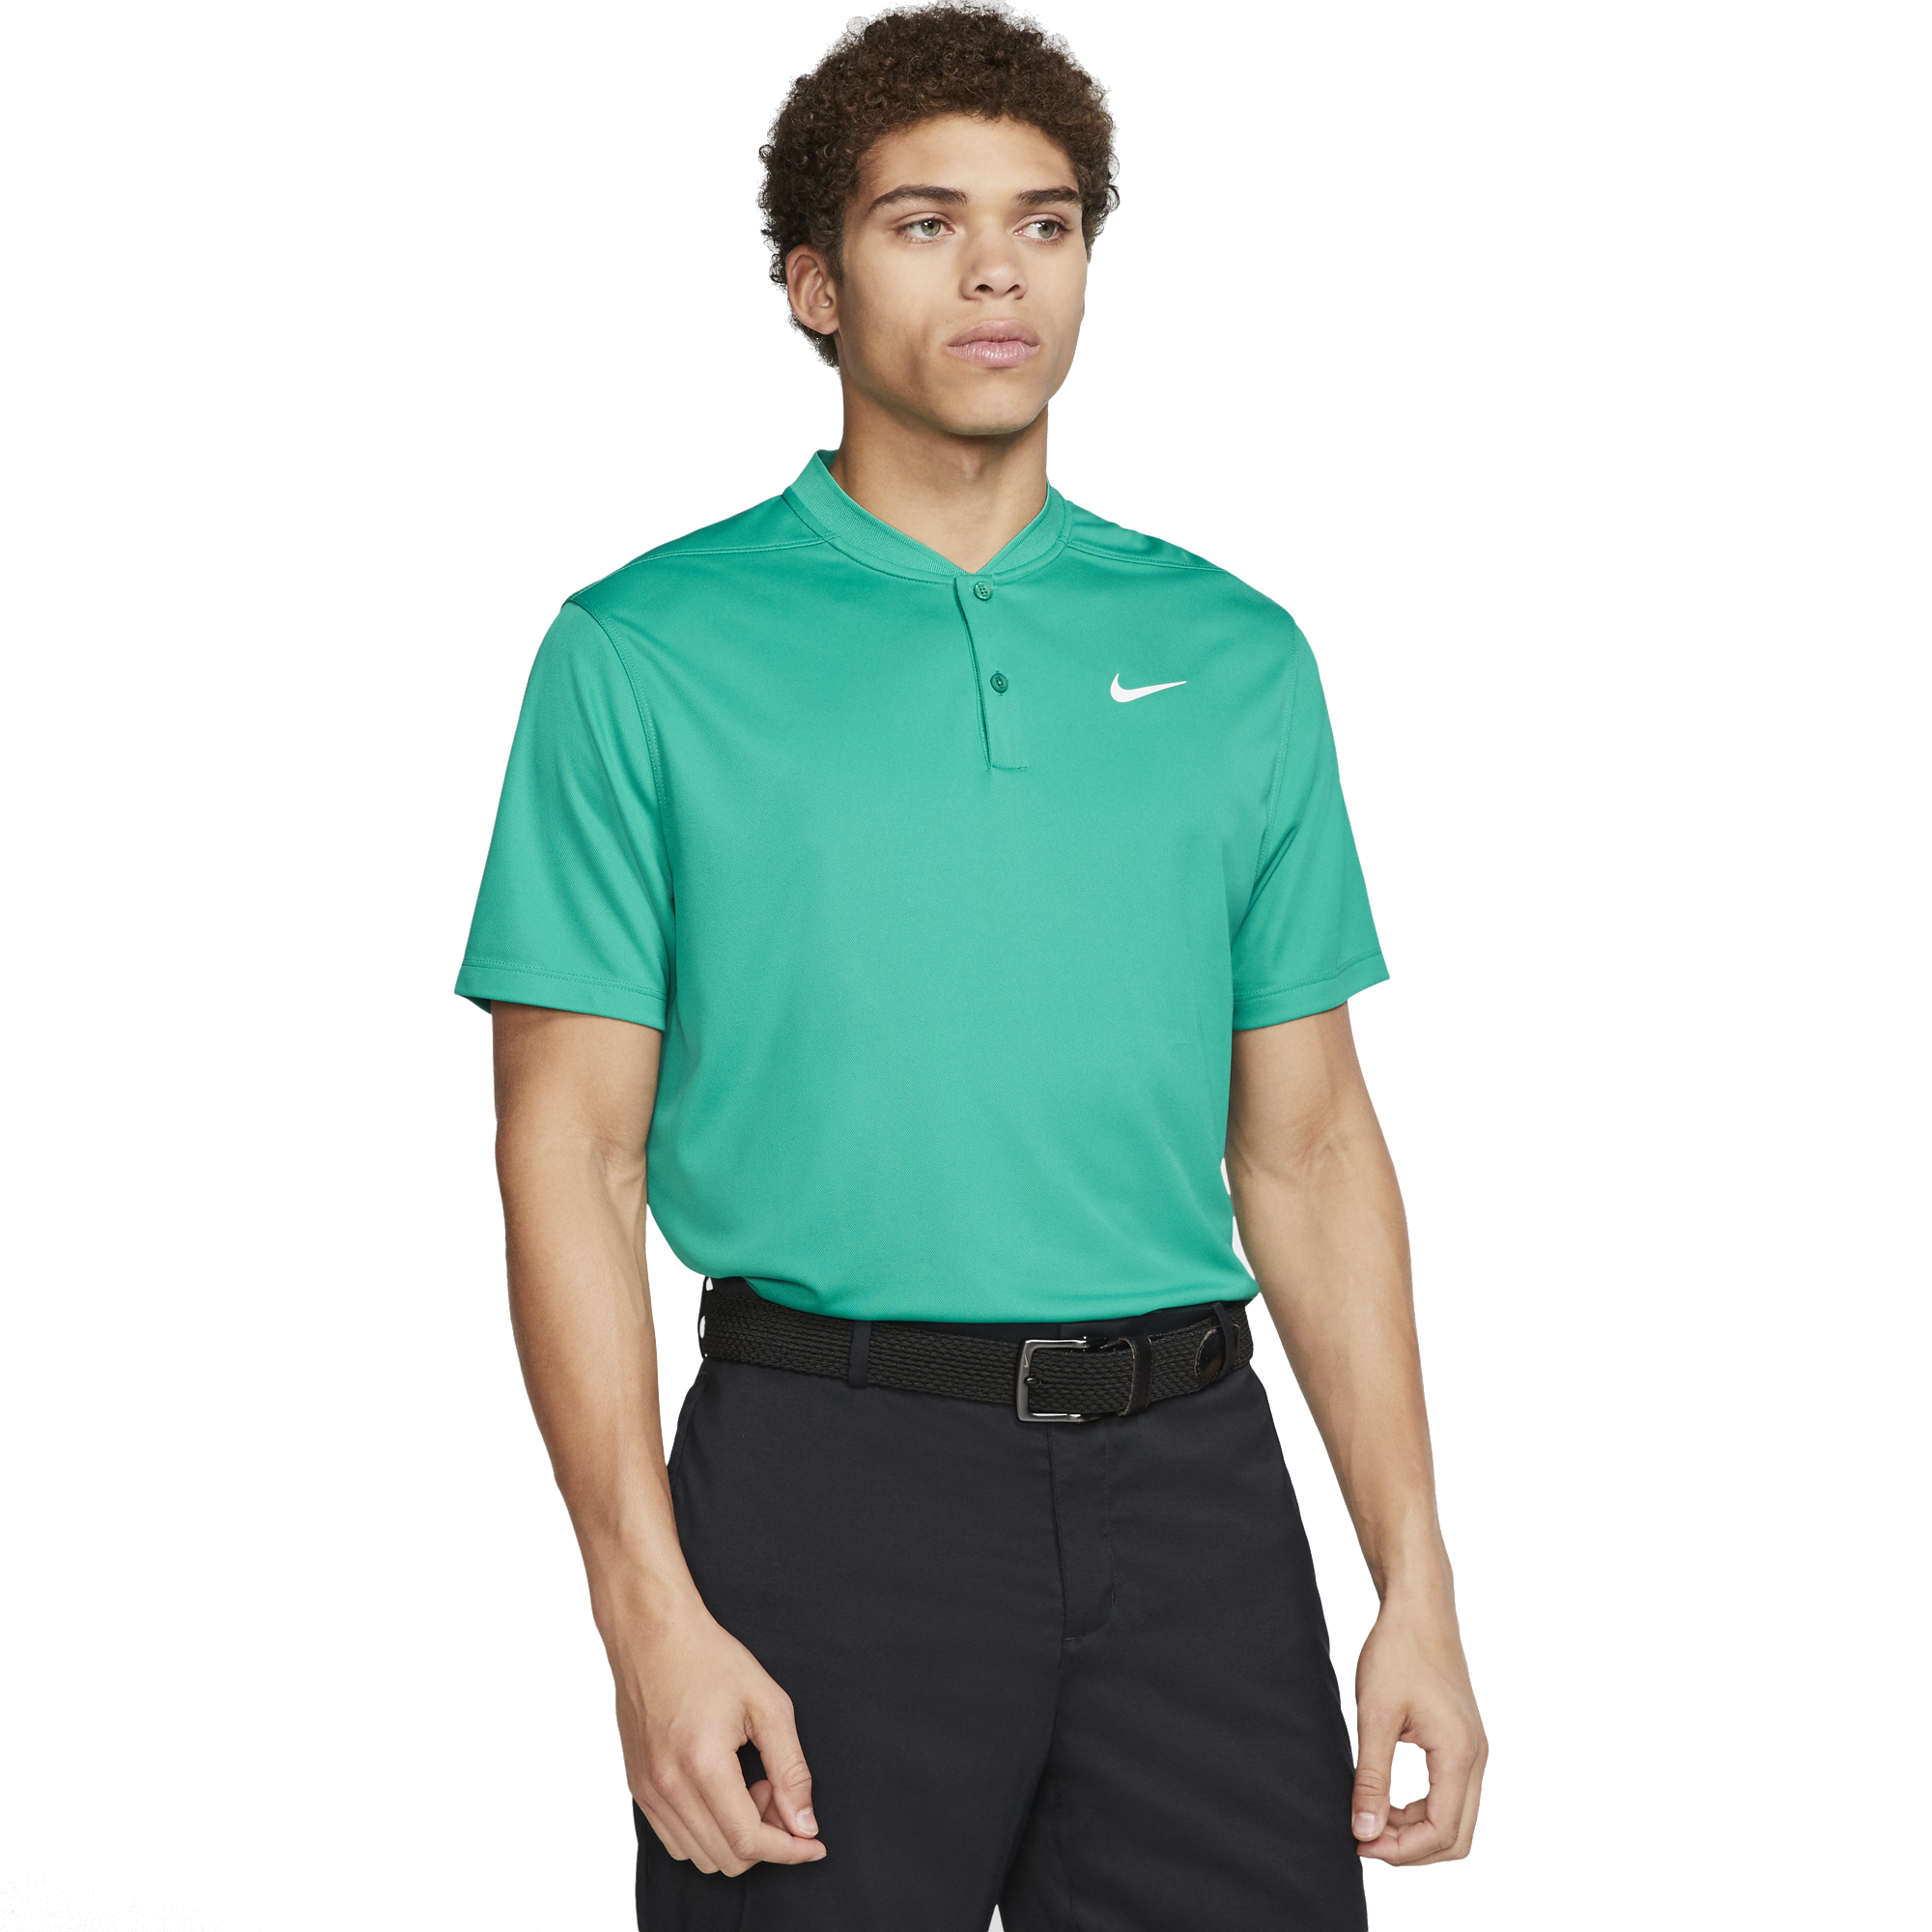 nike golf shirt without collar